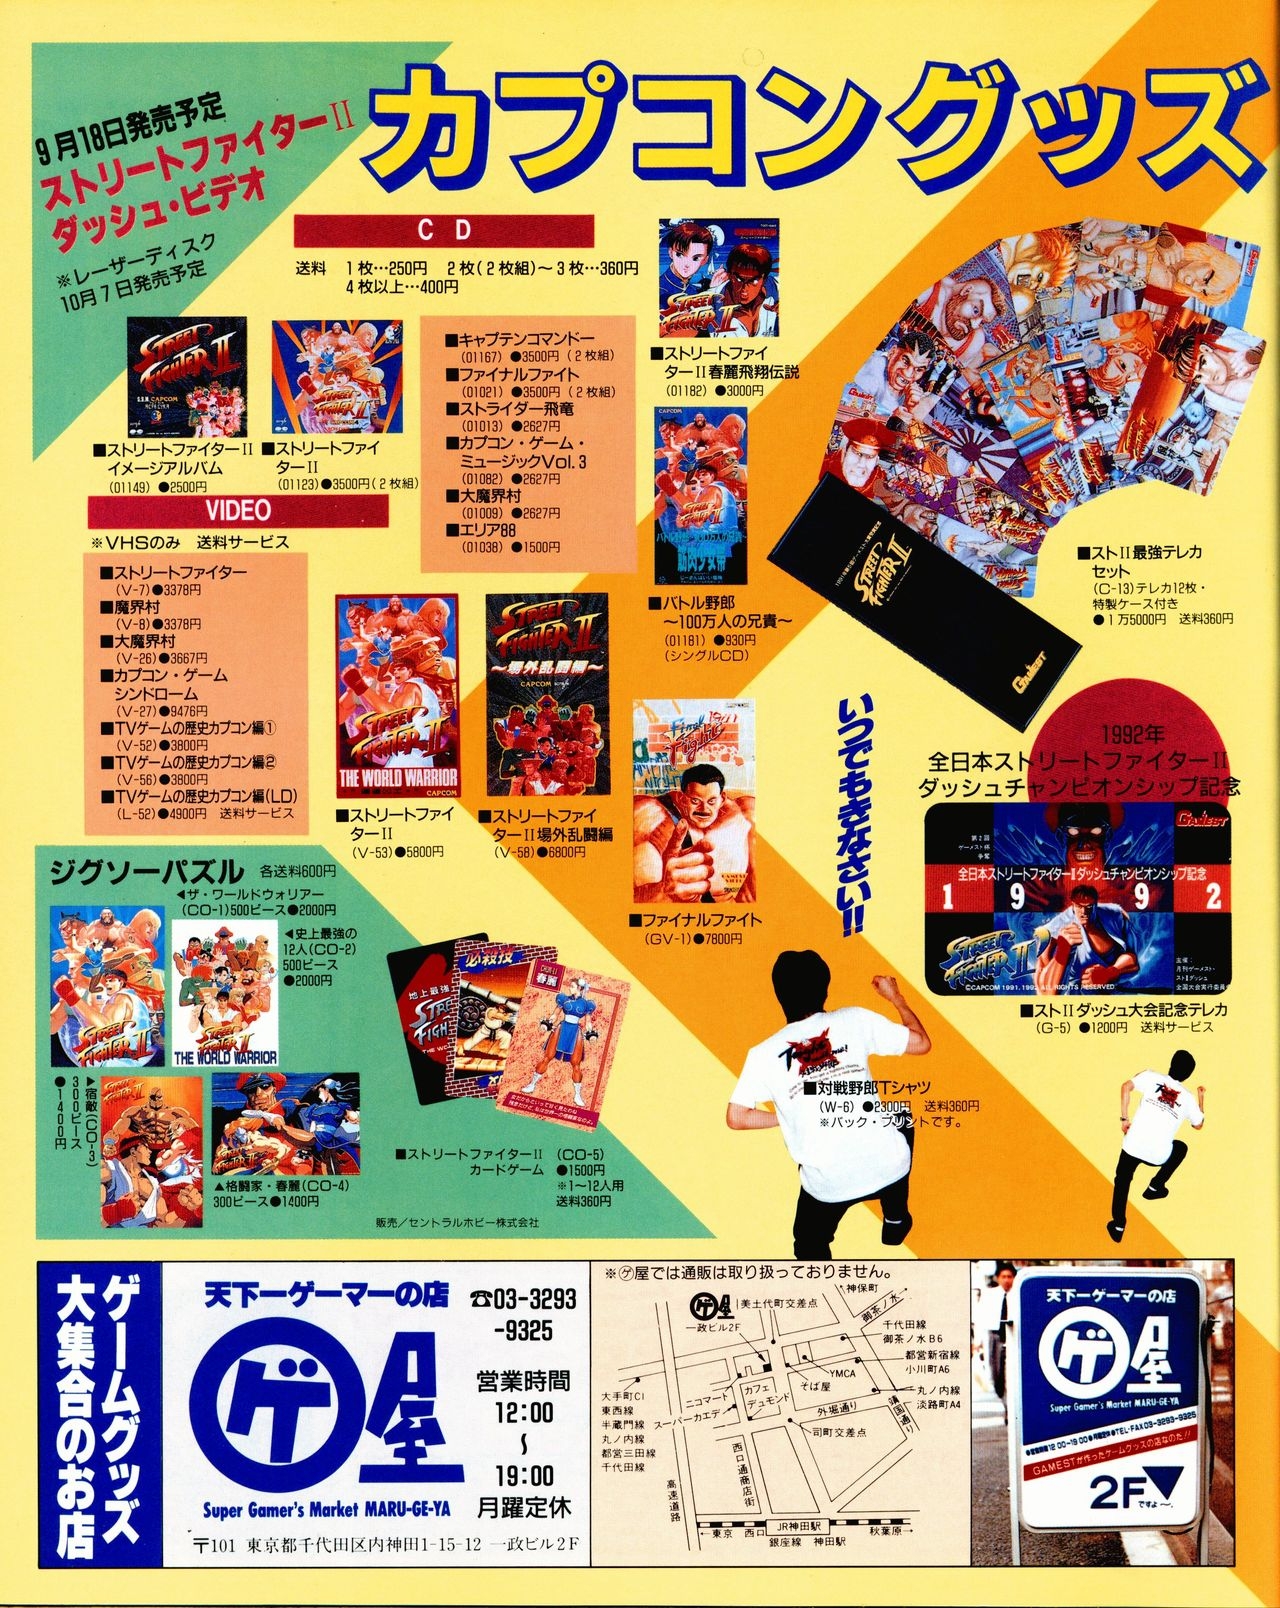 Street Fighter II Dash - Gamest special issue 77 152